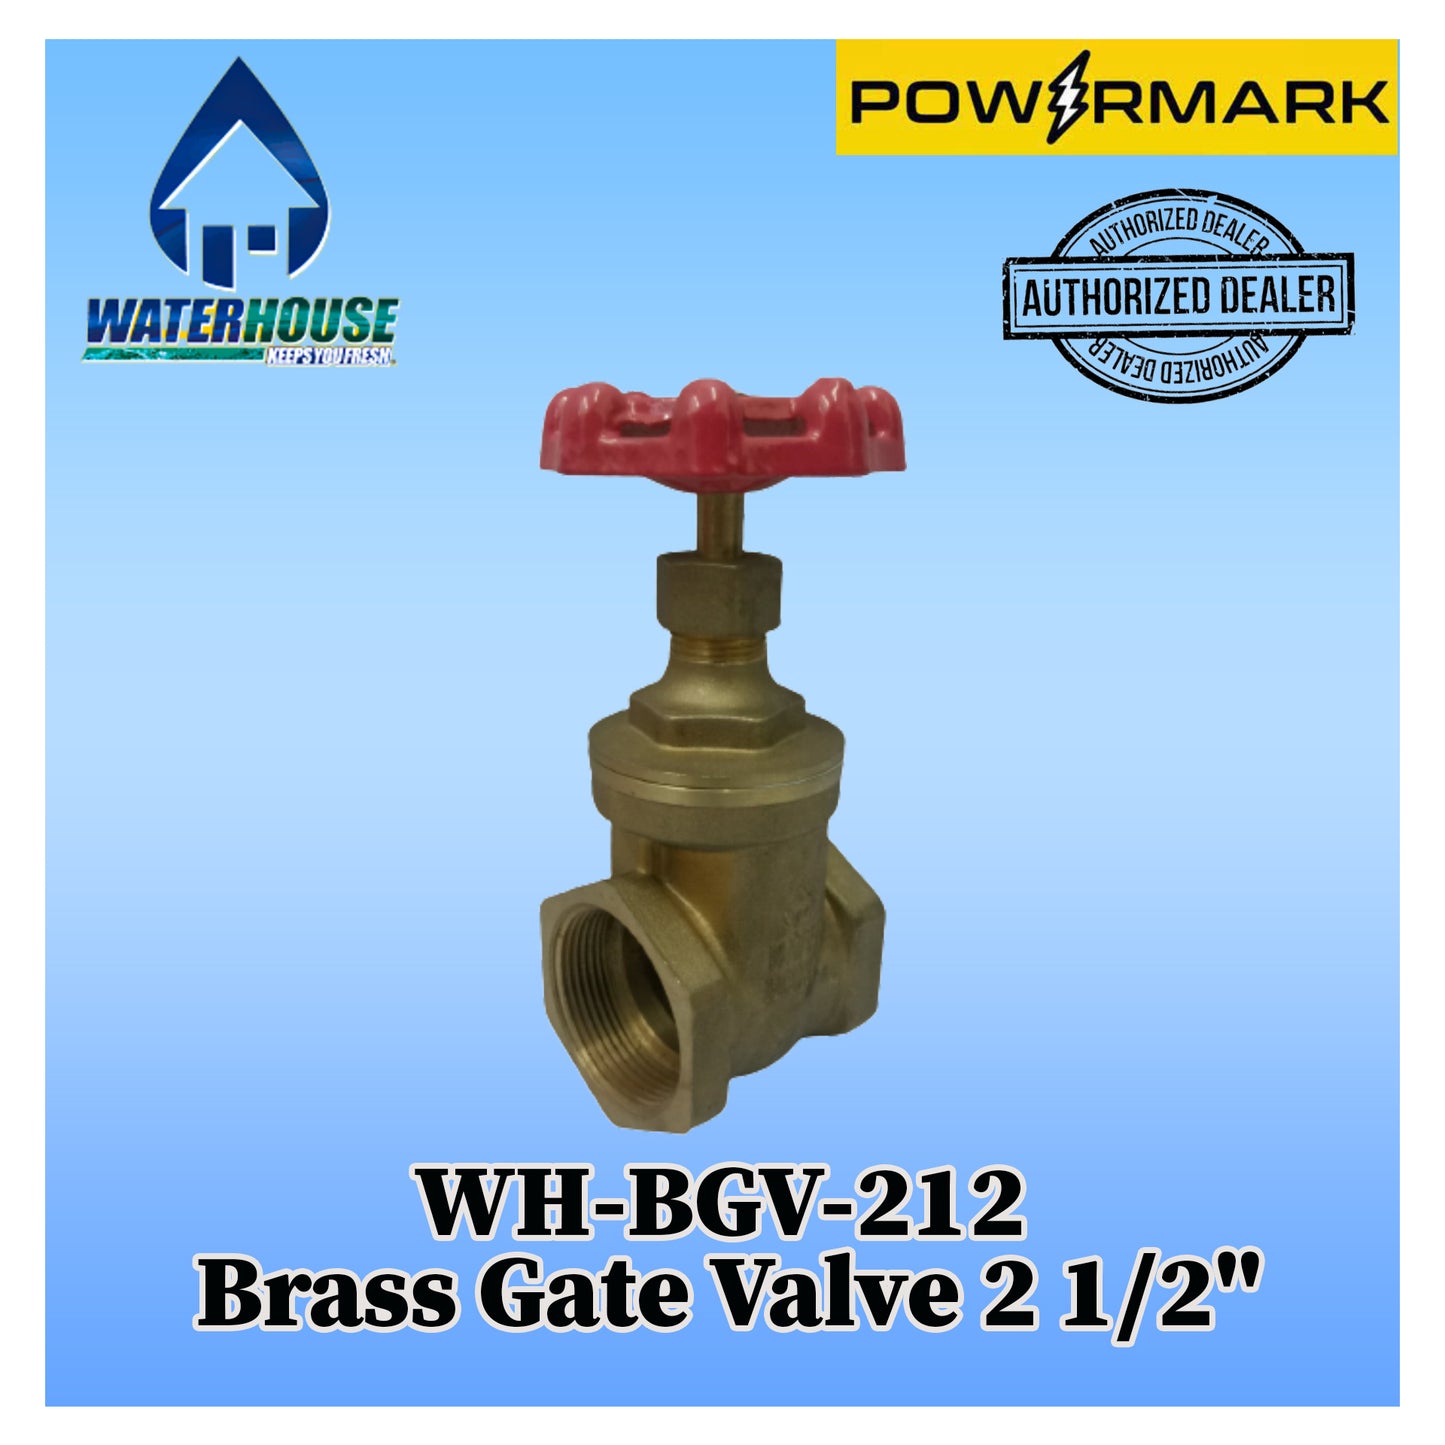 WATERHOUSE WH-BGV-212 Brass Gate Valve 2 1/2"